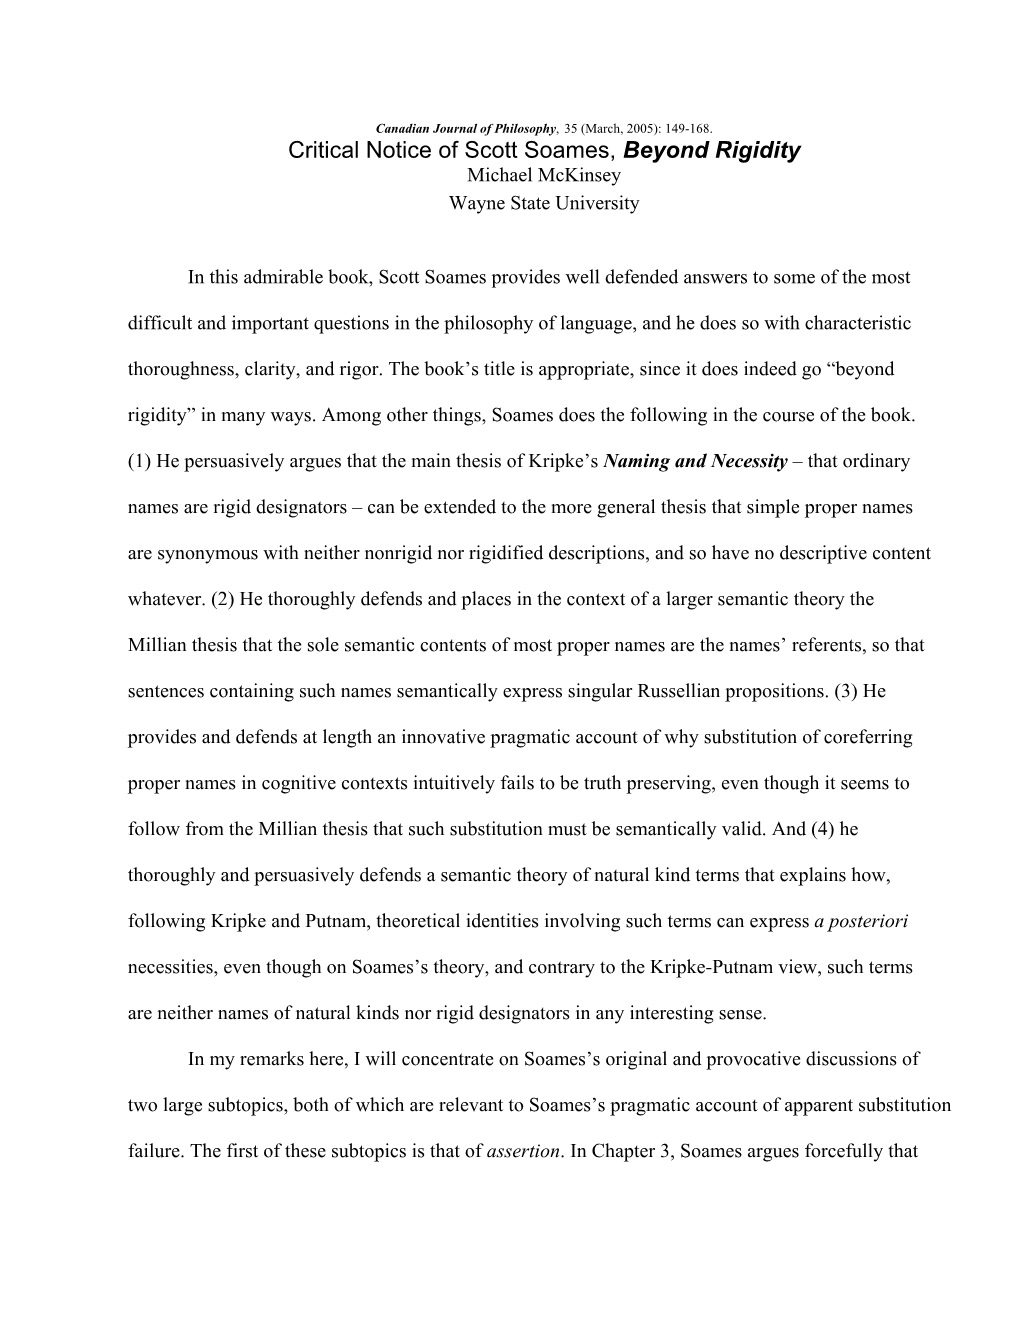 Critical Notice of Scott Soames, Beyond Rigidity Michael Mckinsey Wayne State University